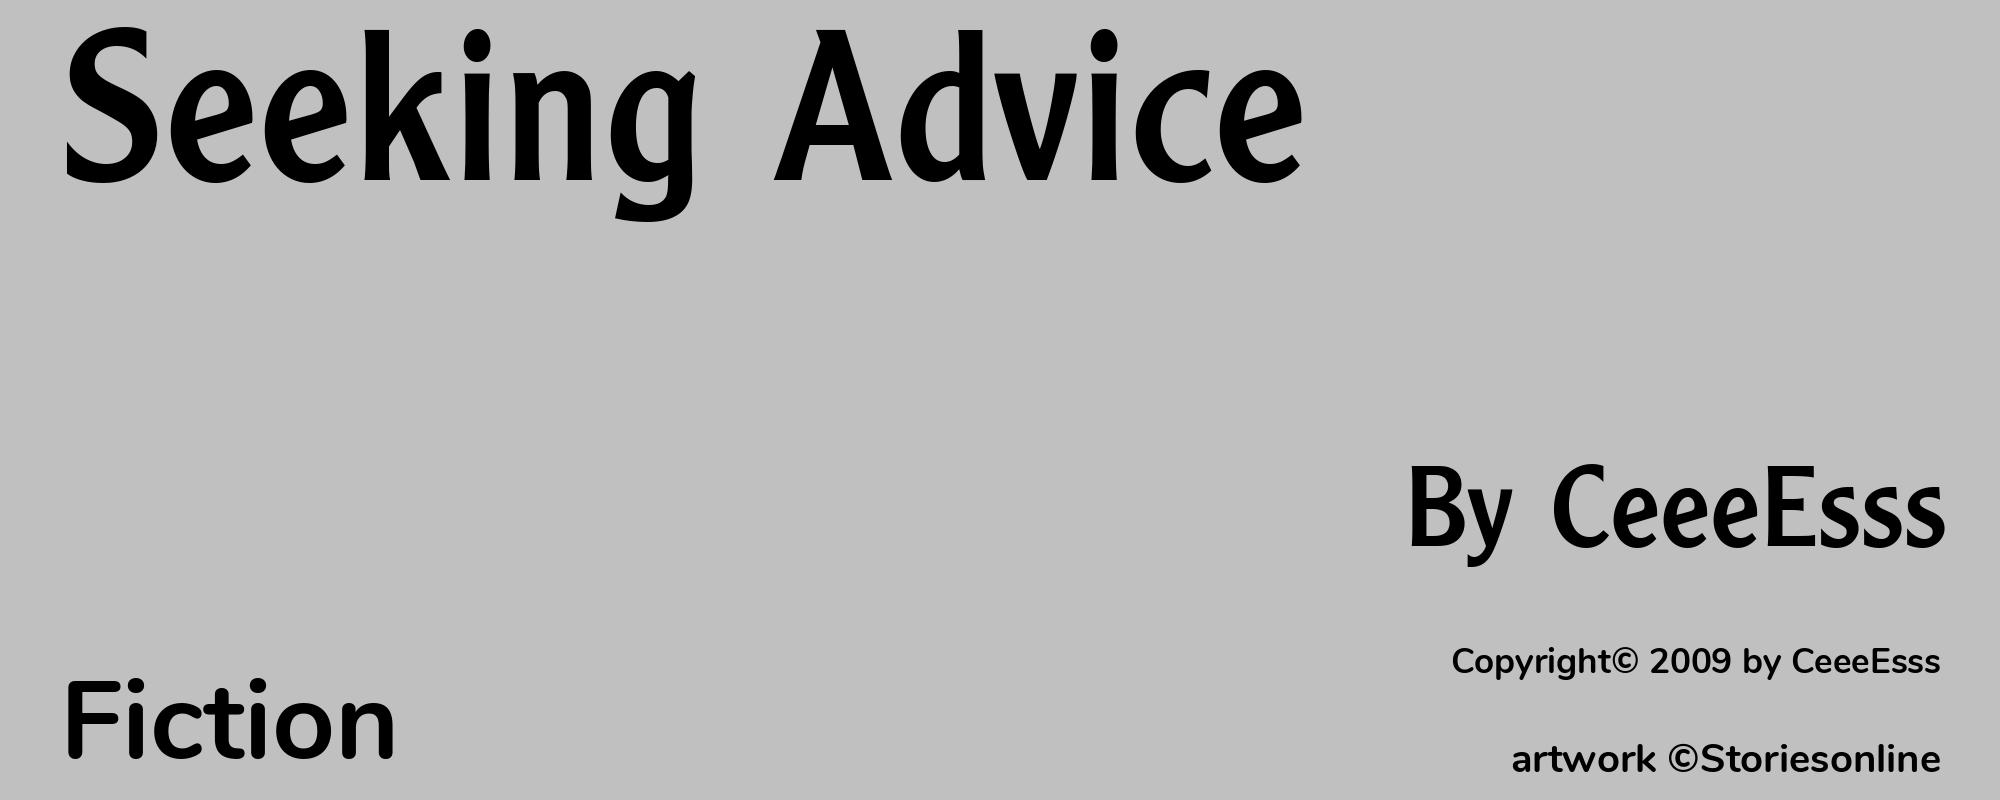 Seeking Advice - Cover